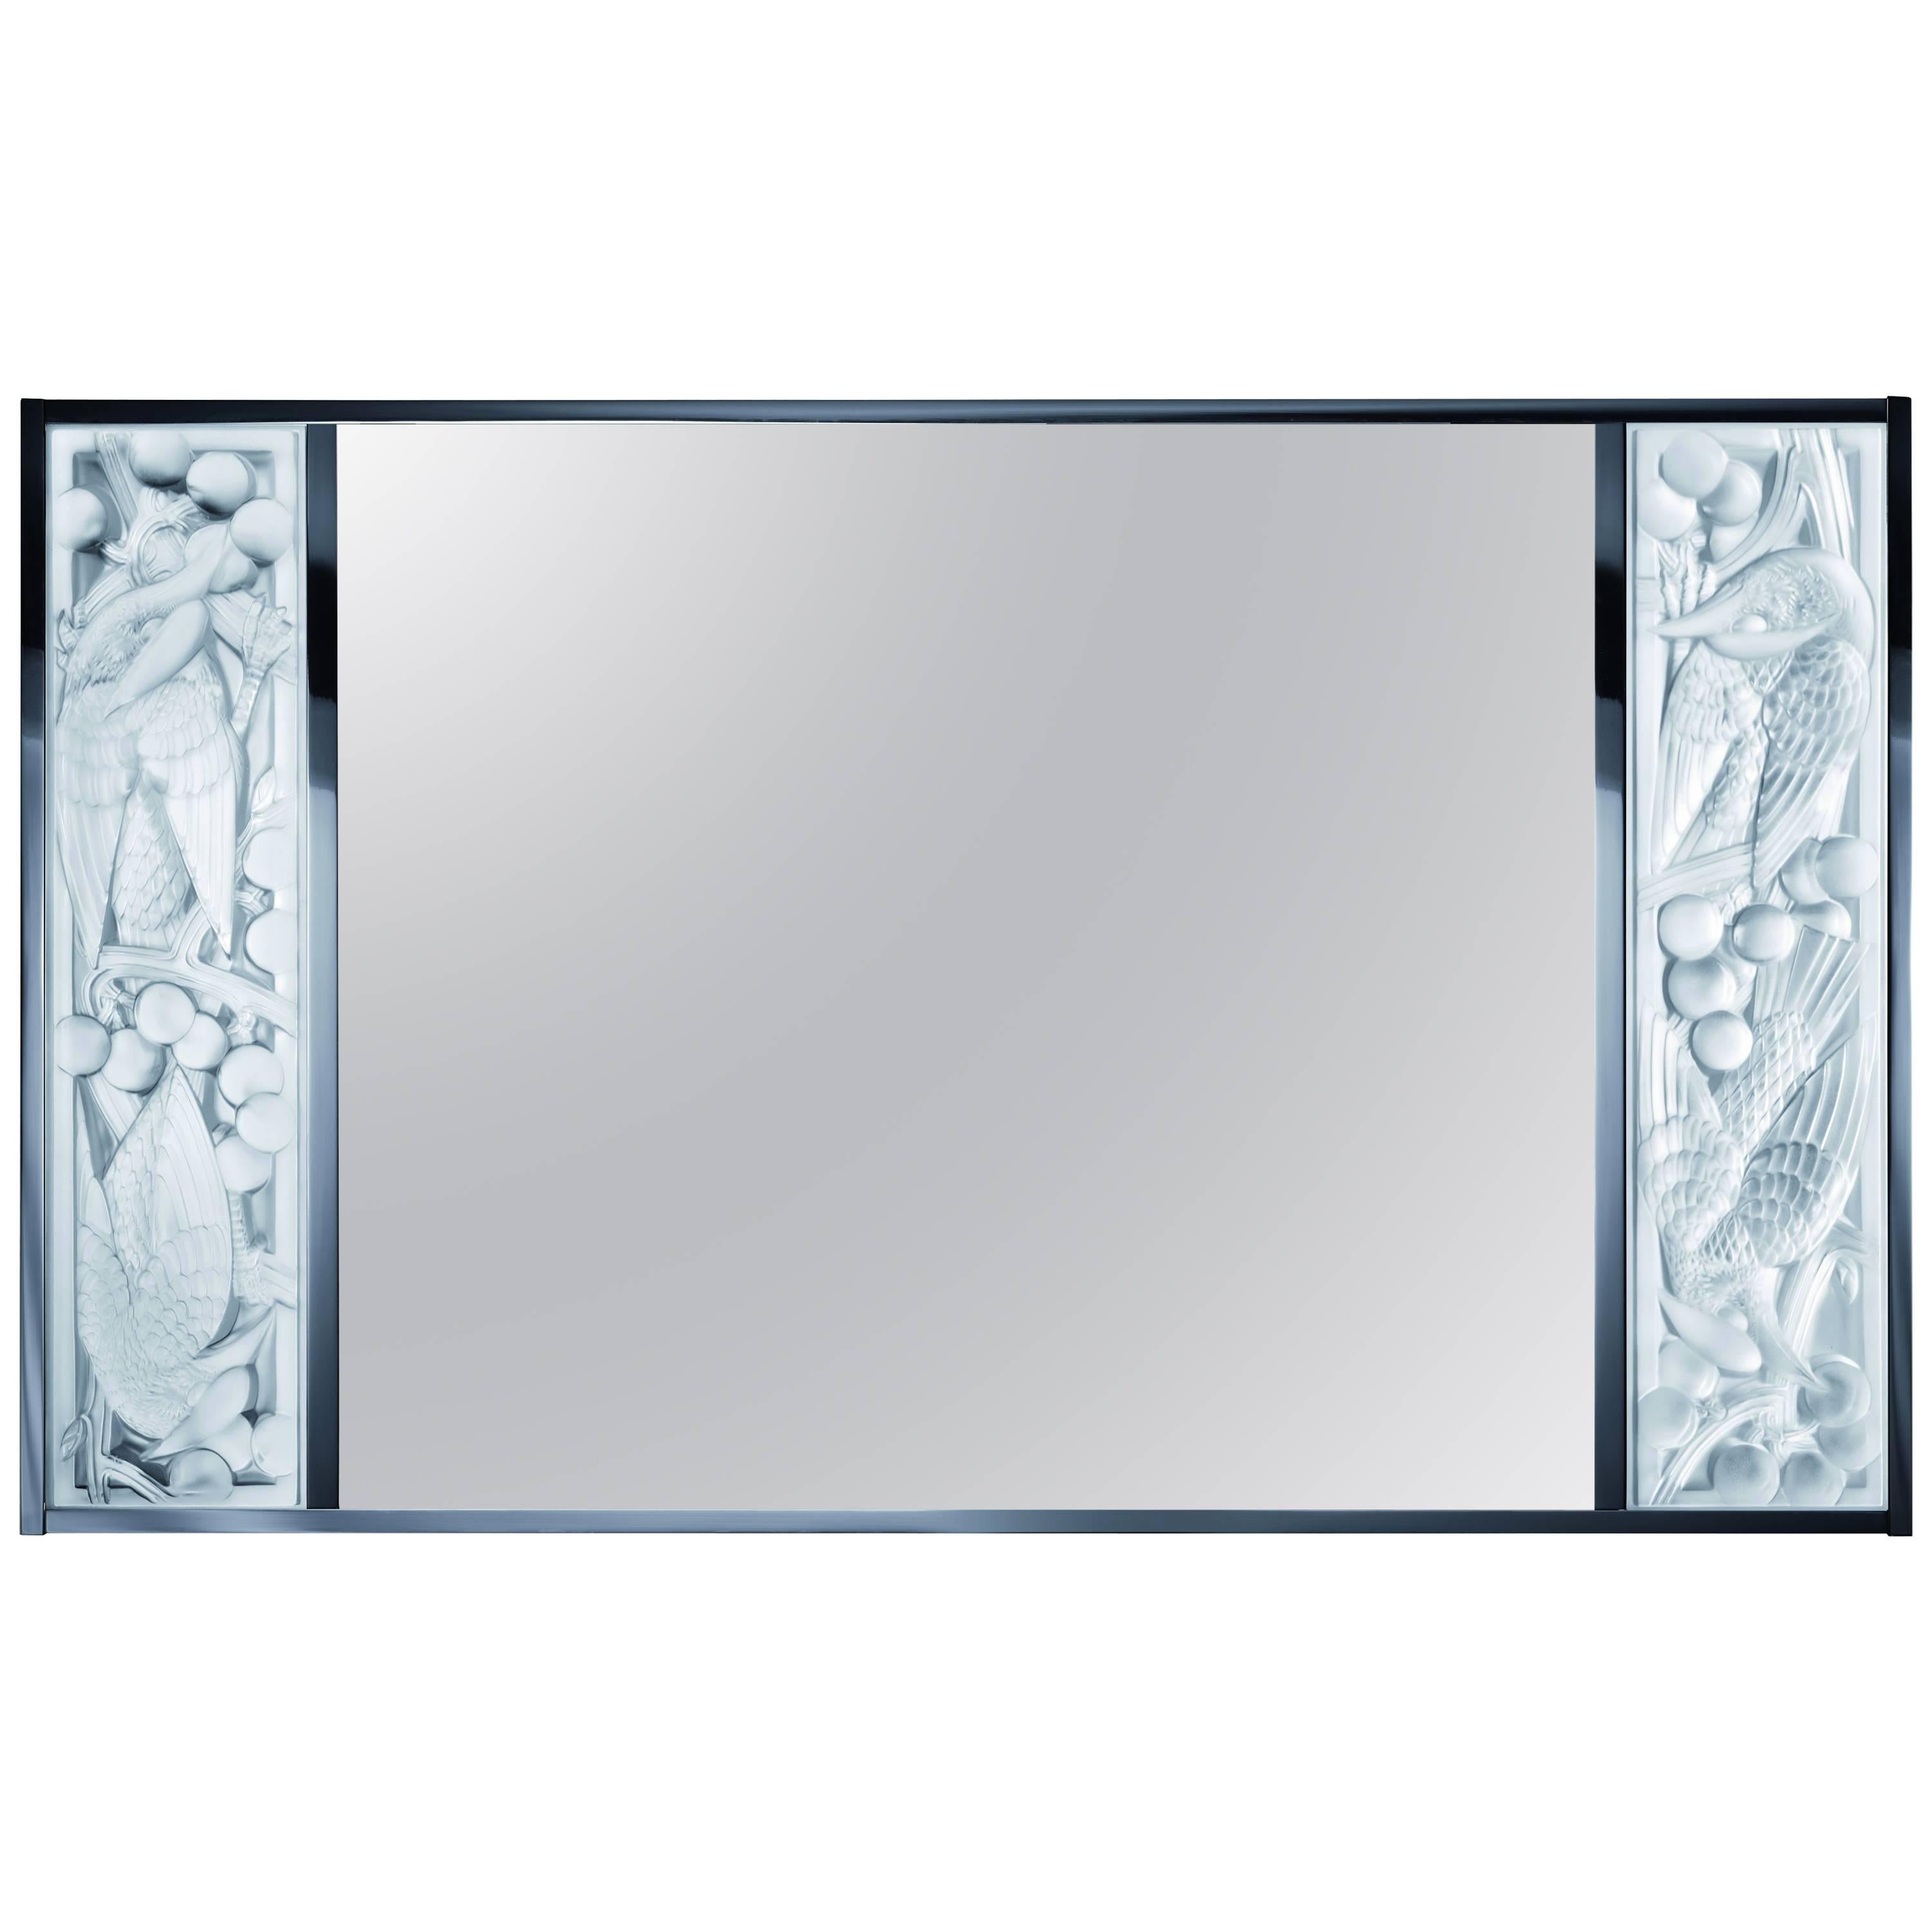 Lalique Clear Crystal Merles et Raisins Wall Mirror